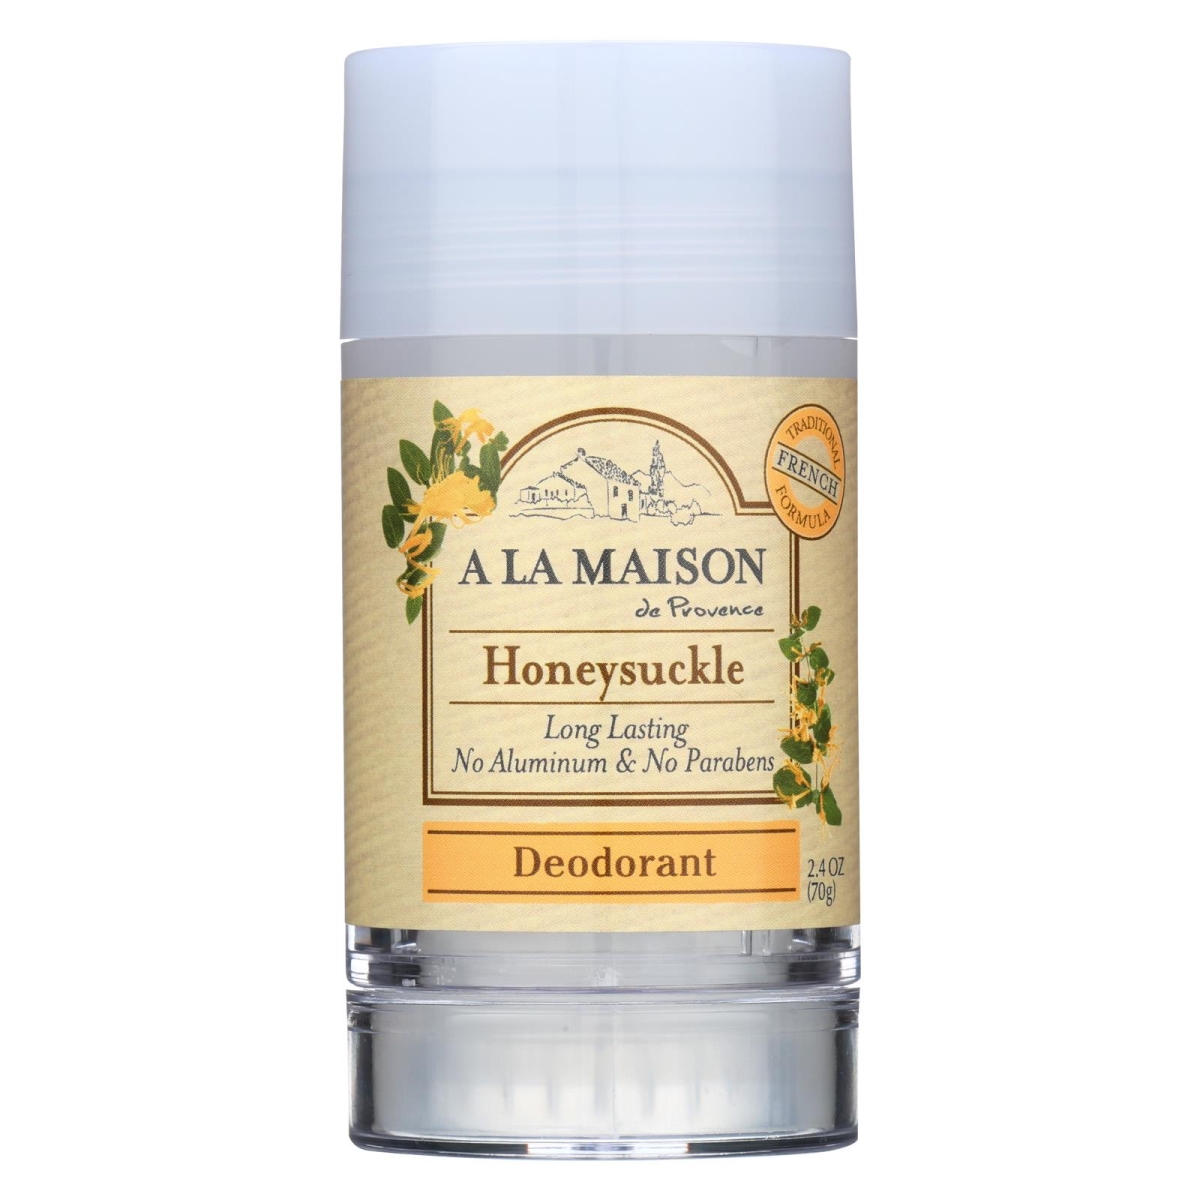 Picture of A LA Maison 2254050 2.4 oz Honeysuckle Deodorant